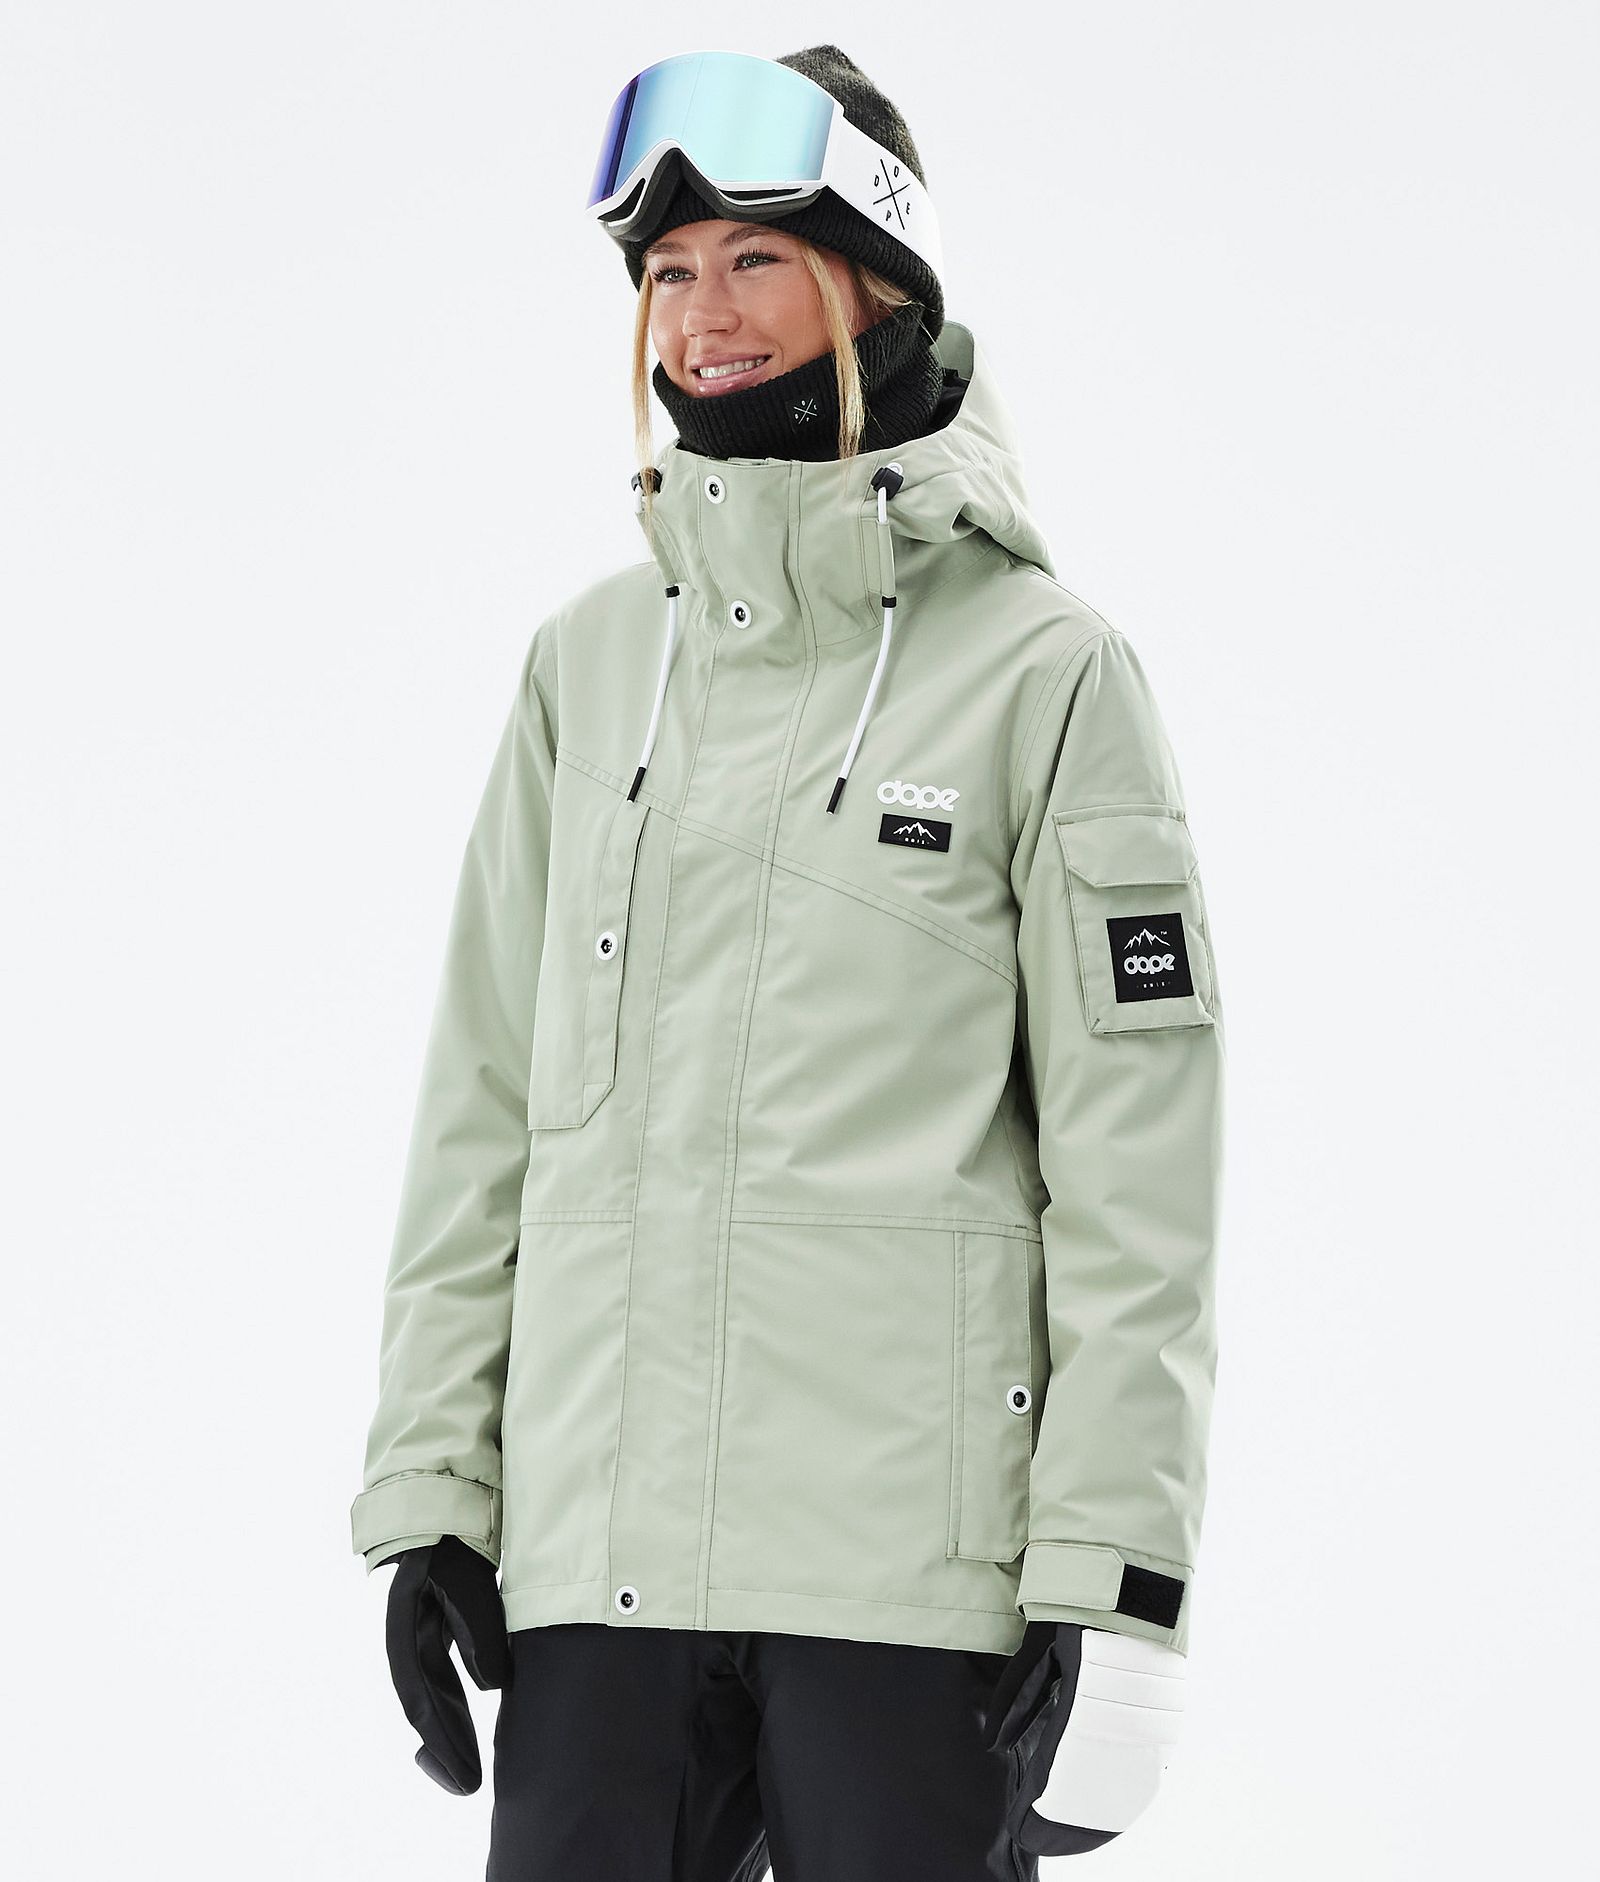 Adept W Snowboard Jacket Women Soft Green Renewed